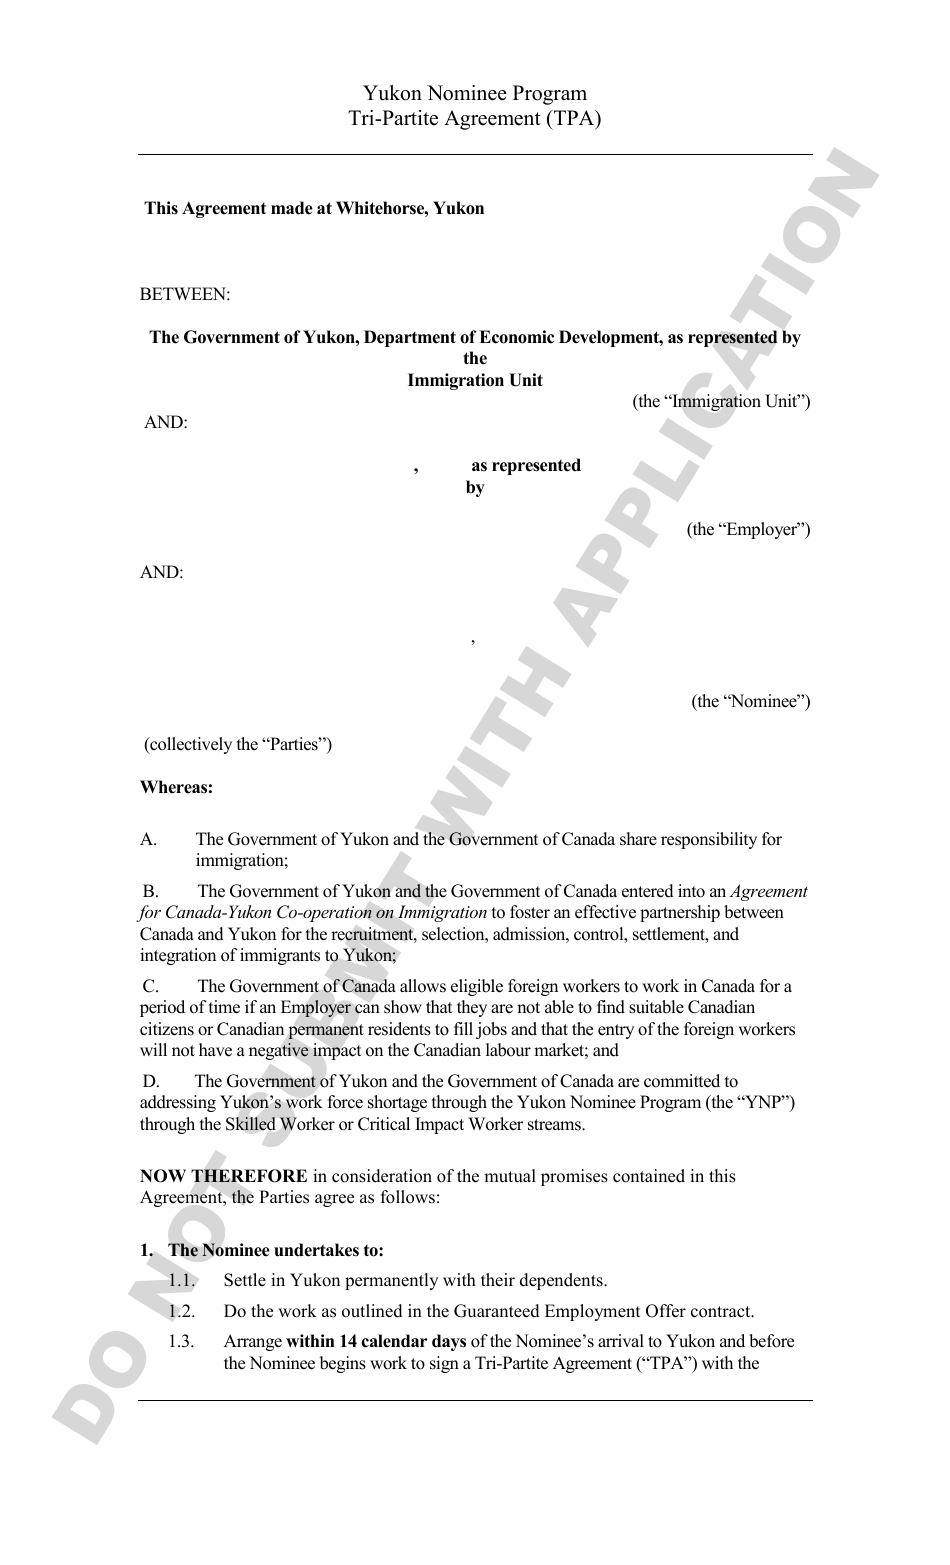 Yukon Nominee Program Tri-Partite Agreement (Tpa) - Yukon, Canada, Page 1